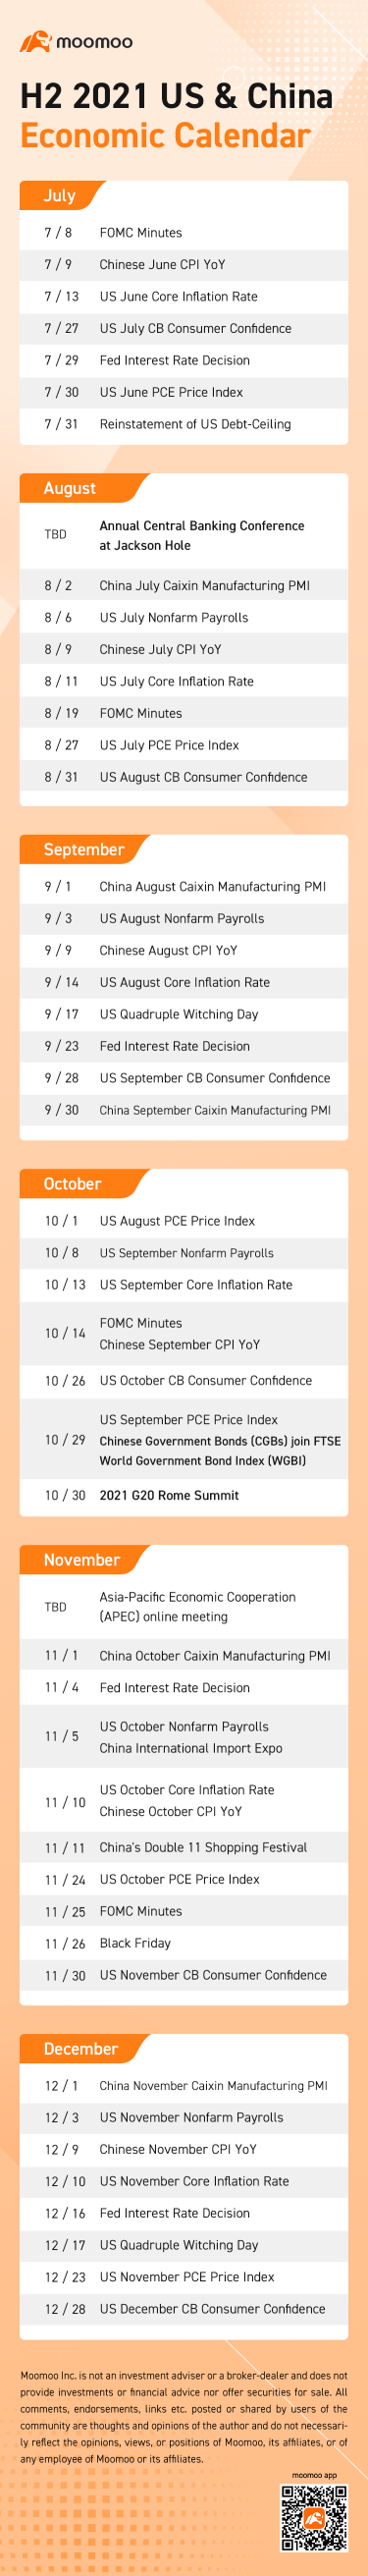 H2 2021 US & China Economic Calendar